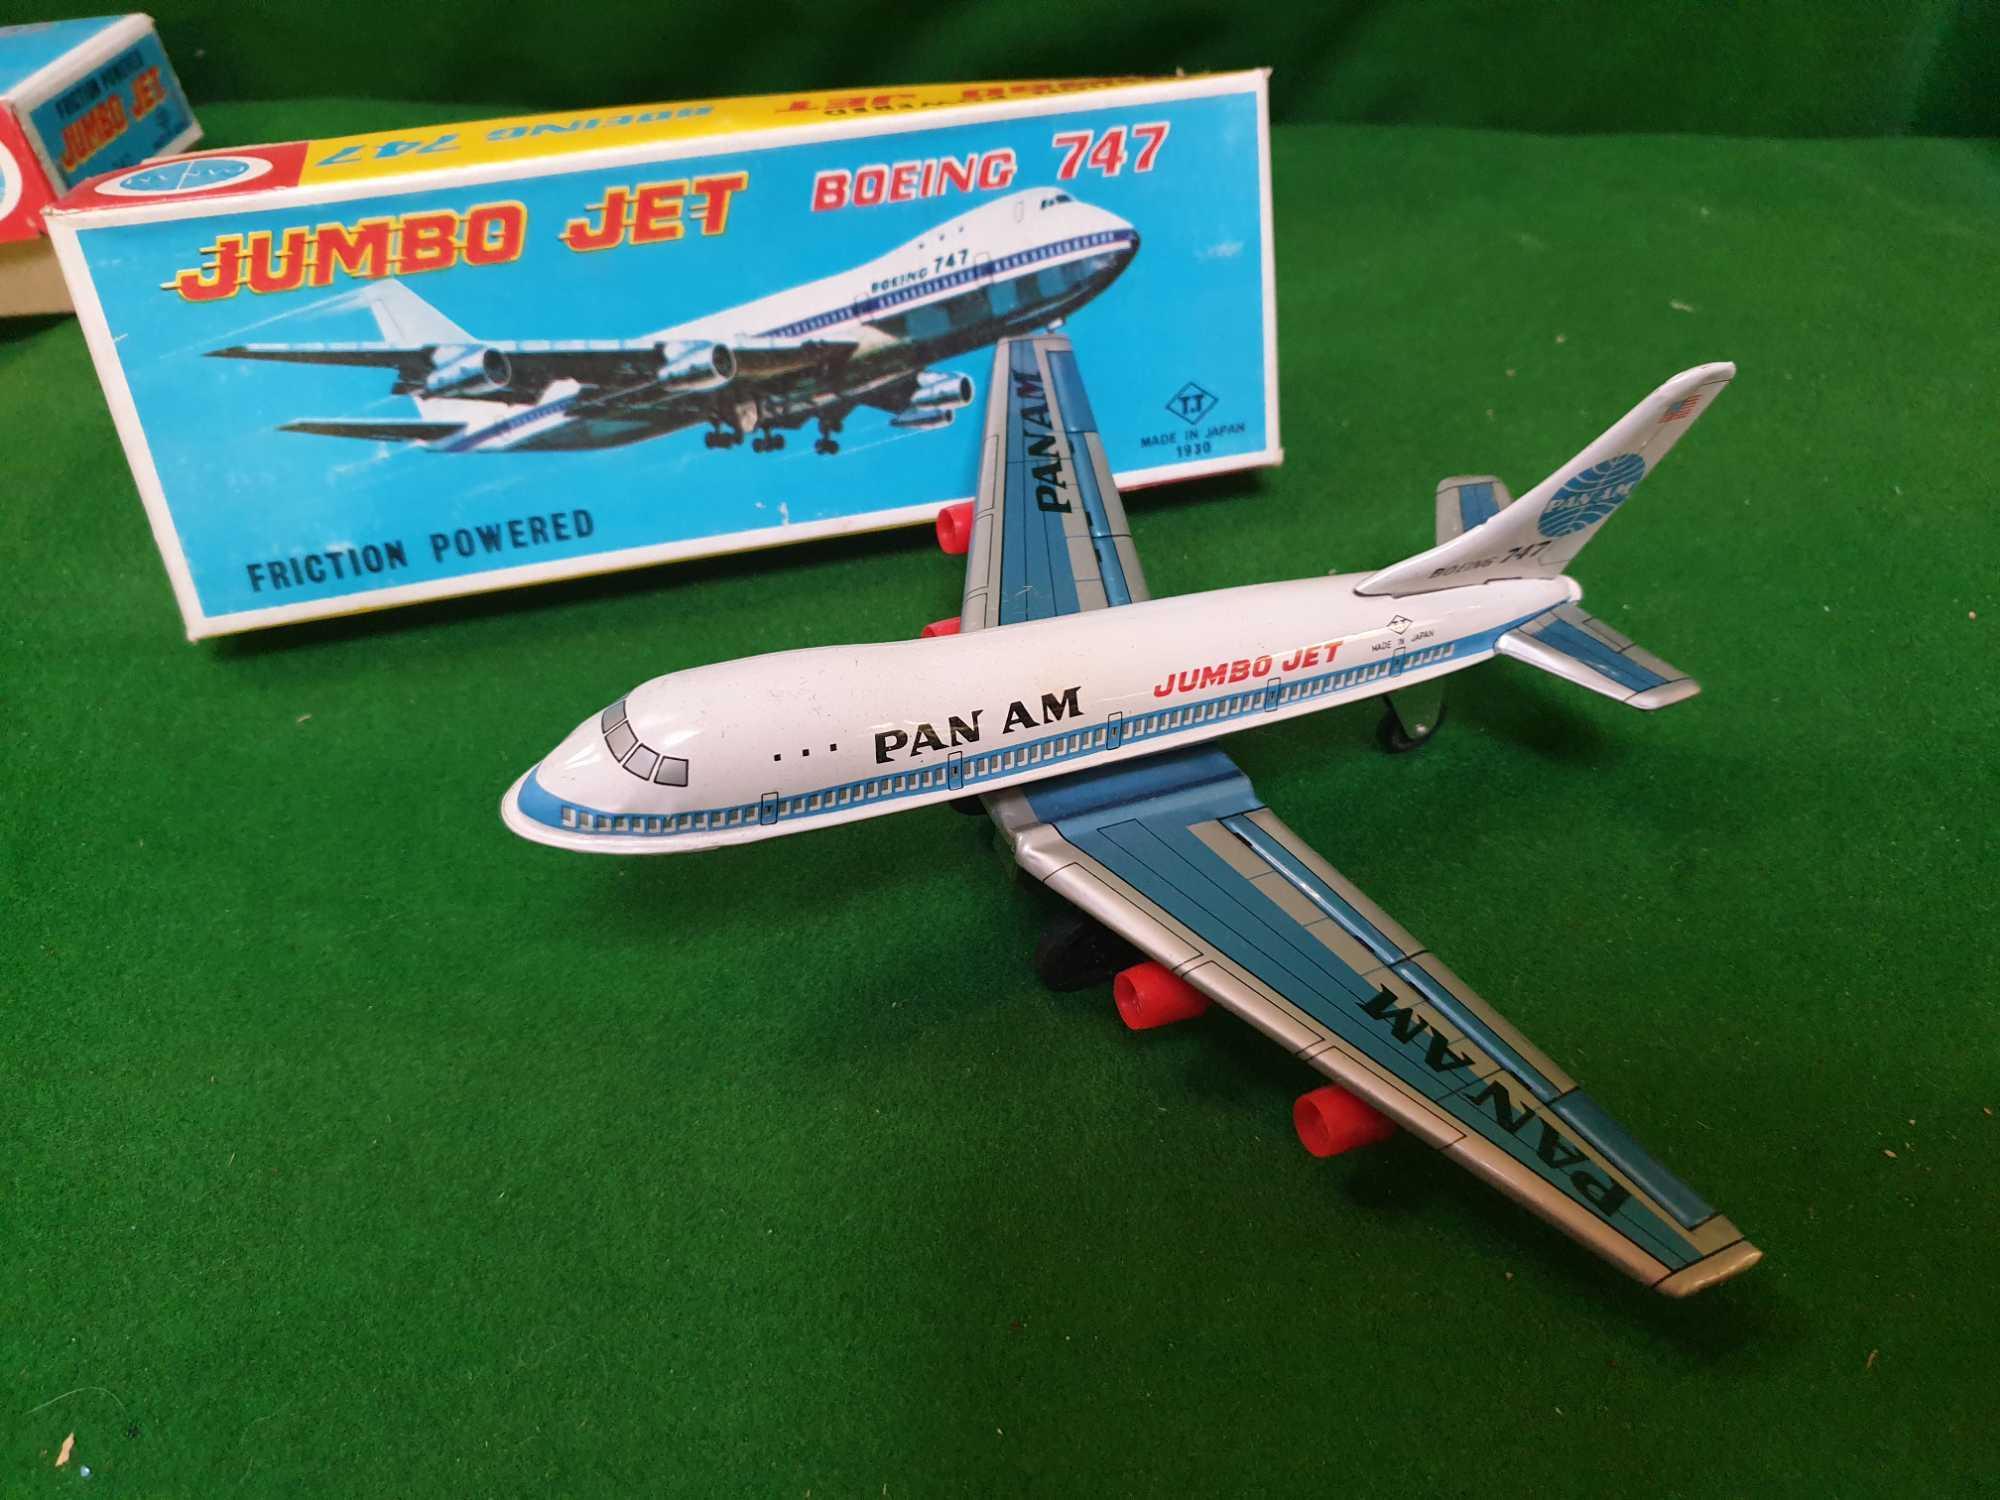 TT Takatoku Toys Japan Jumbo Jet Boeing 747 Friction Toy Plane Pan AM Decals - Image 2 of 3